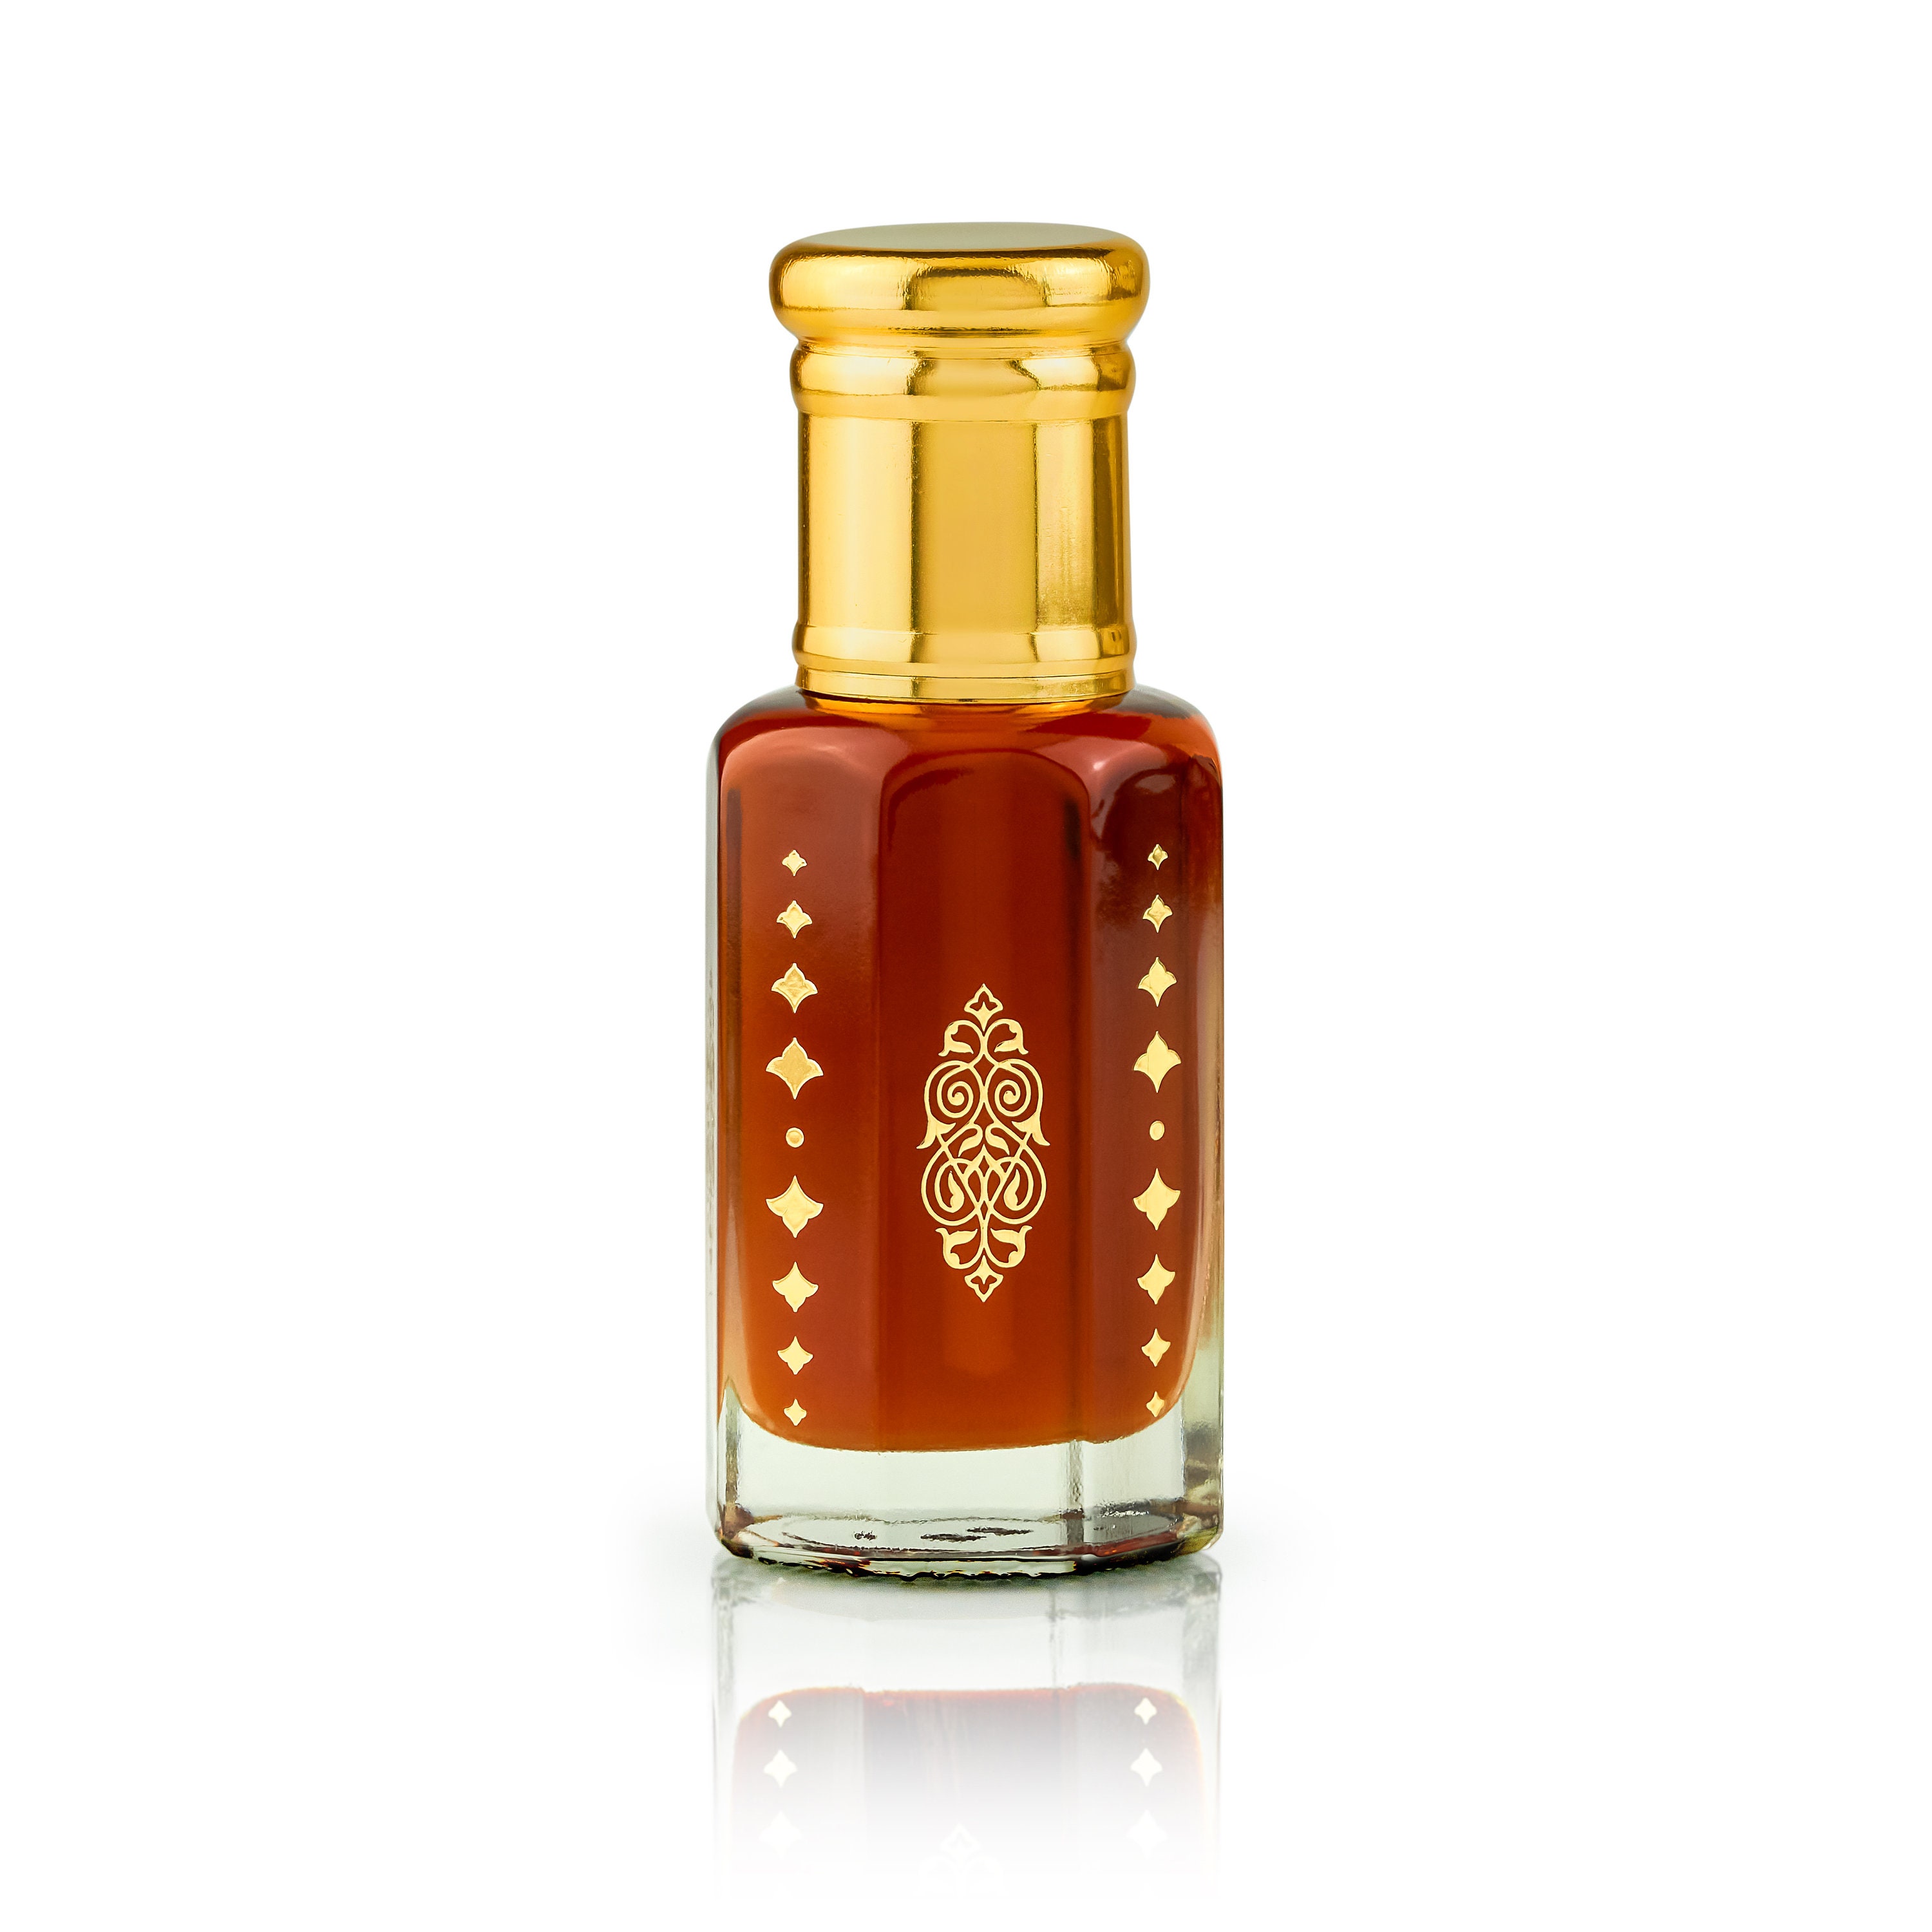 Attar Bazaar Indian Jasmine - Essential Oil 1 DRAM